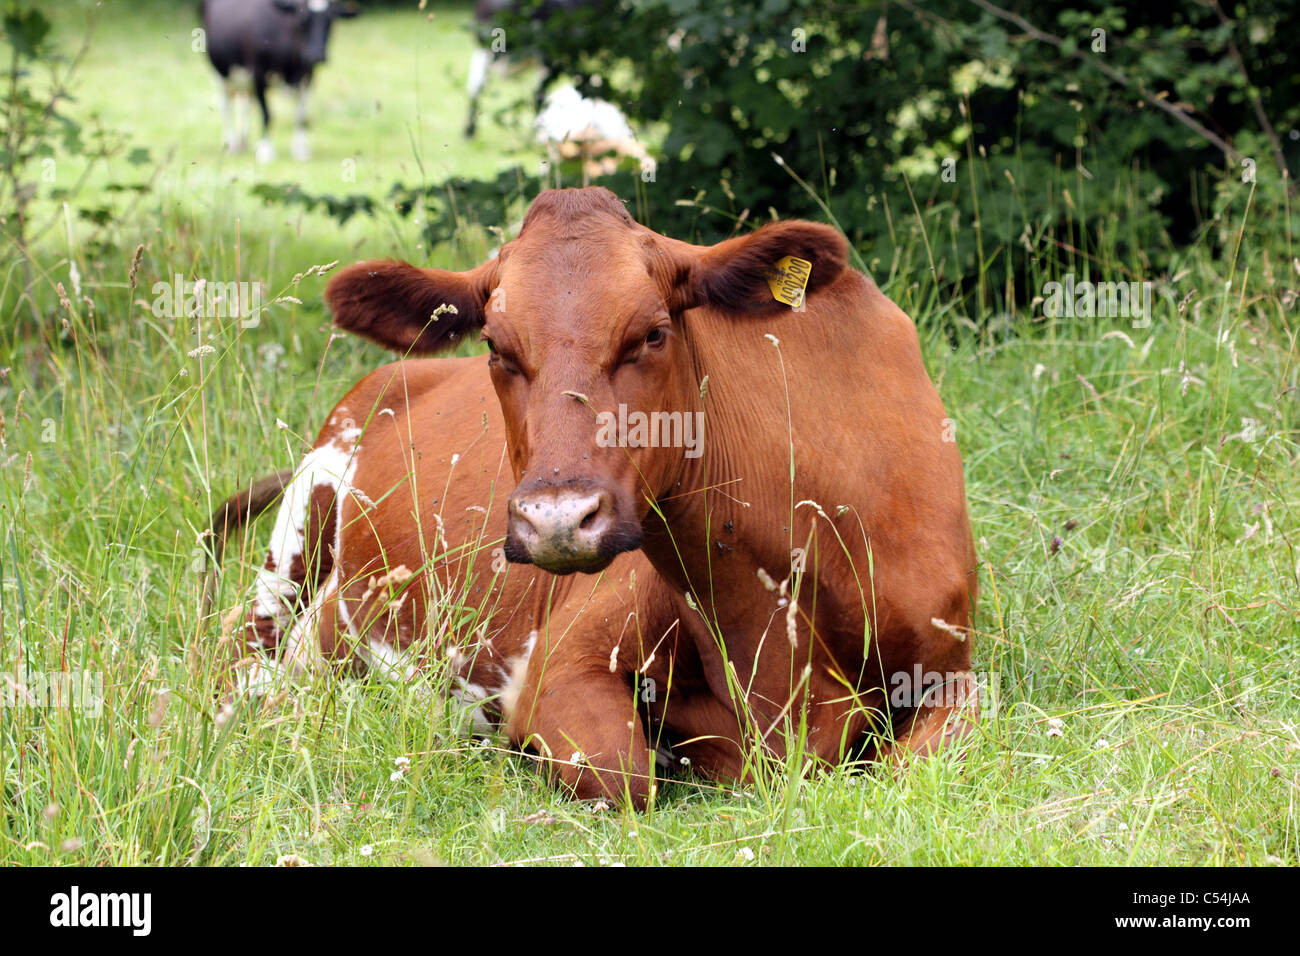 Cow Grazing in Grass a Domestic farm animal or livestock Stock Photo